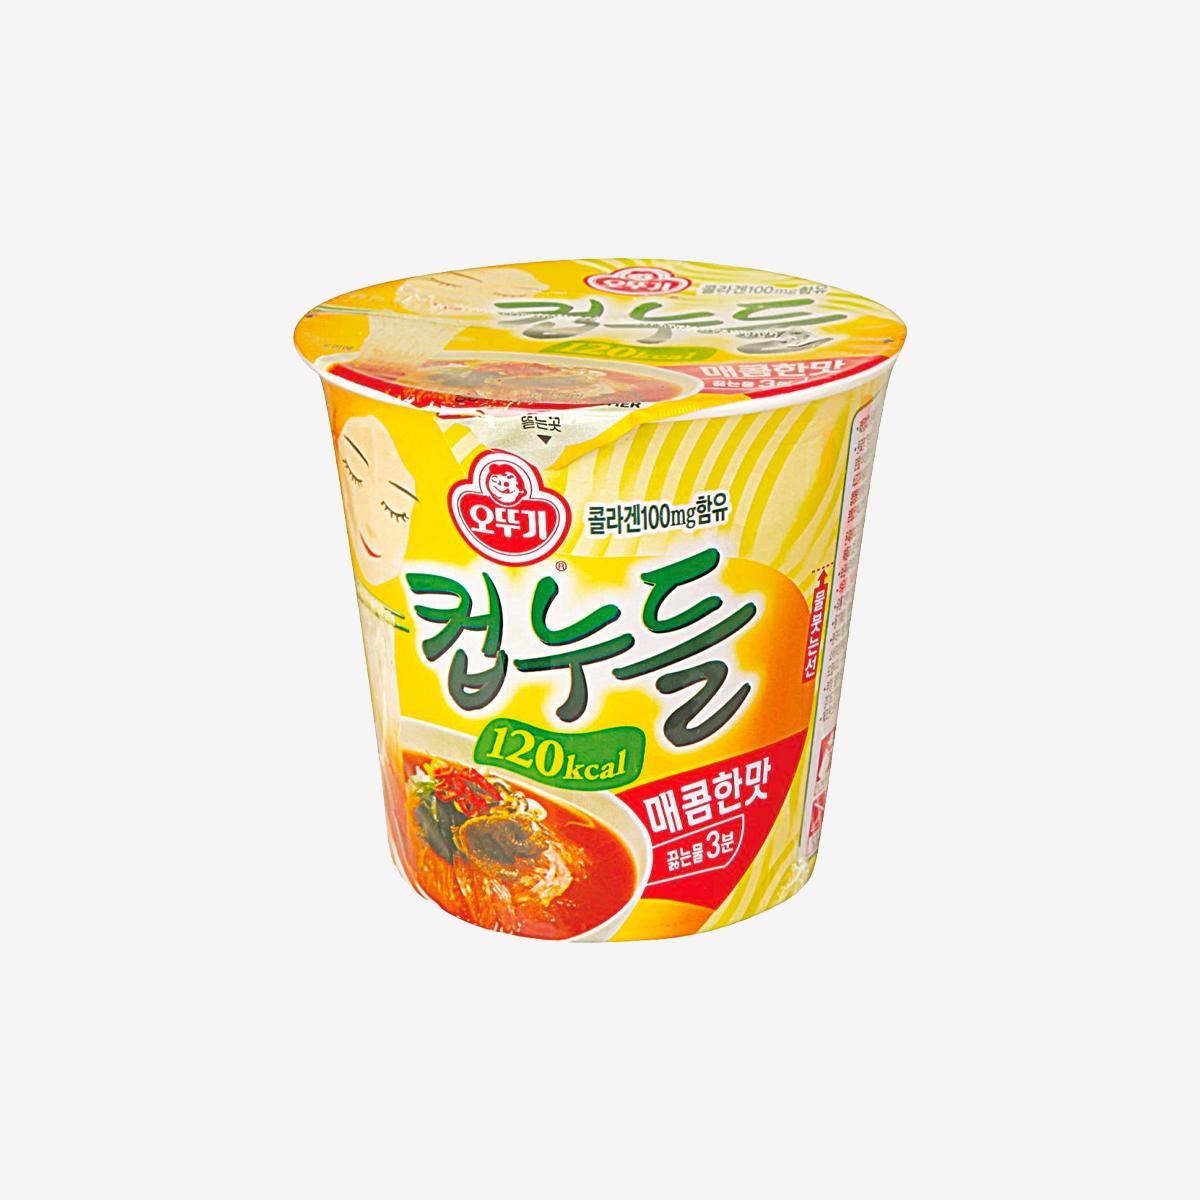 Cup Noodles Spicy Flavor (37.8g)